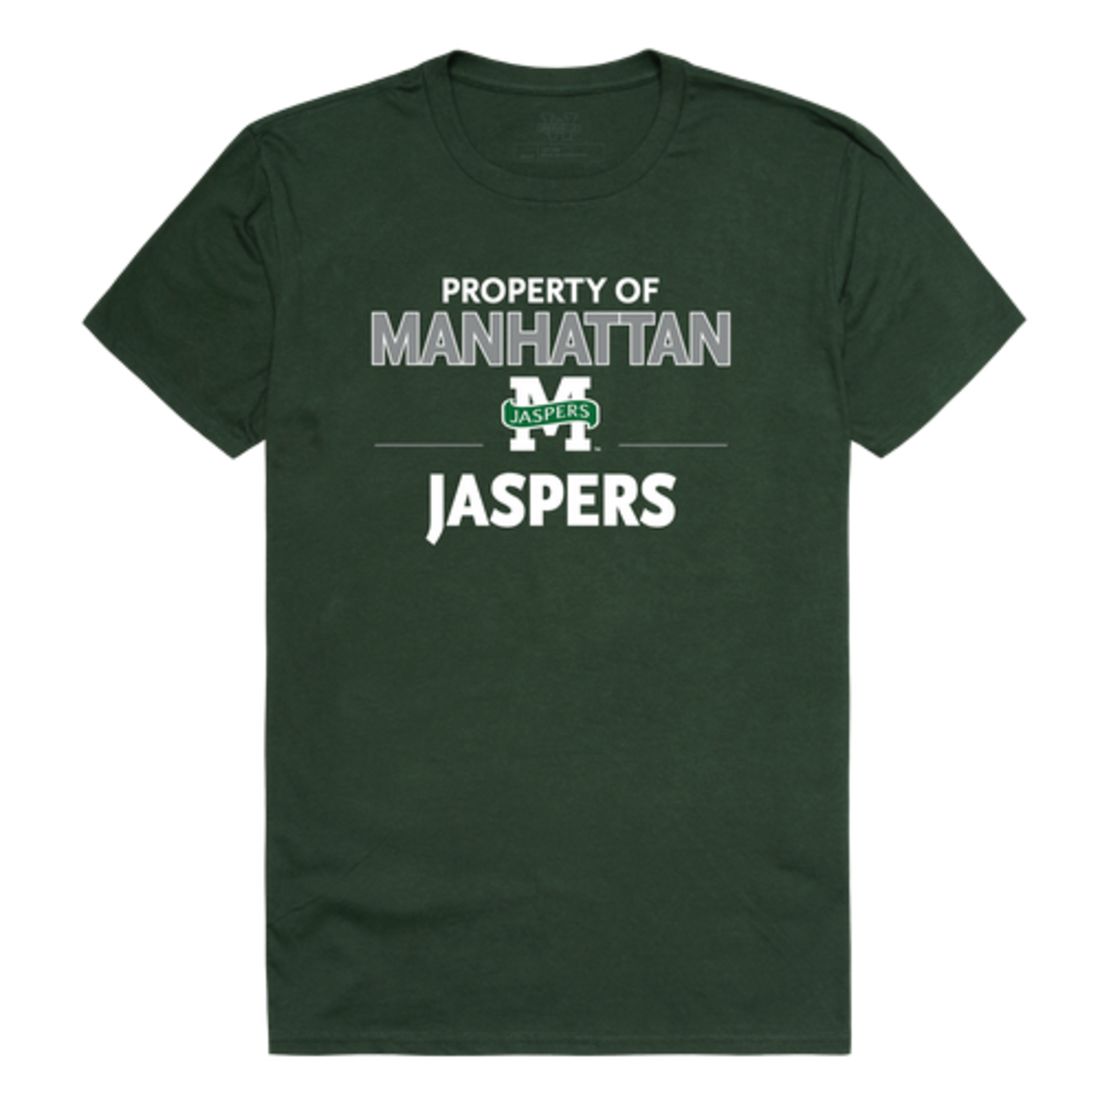 Manhattan College Jaspers Property T-Shirt